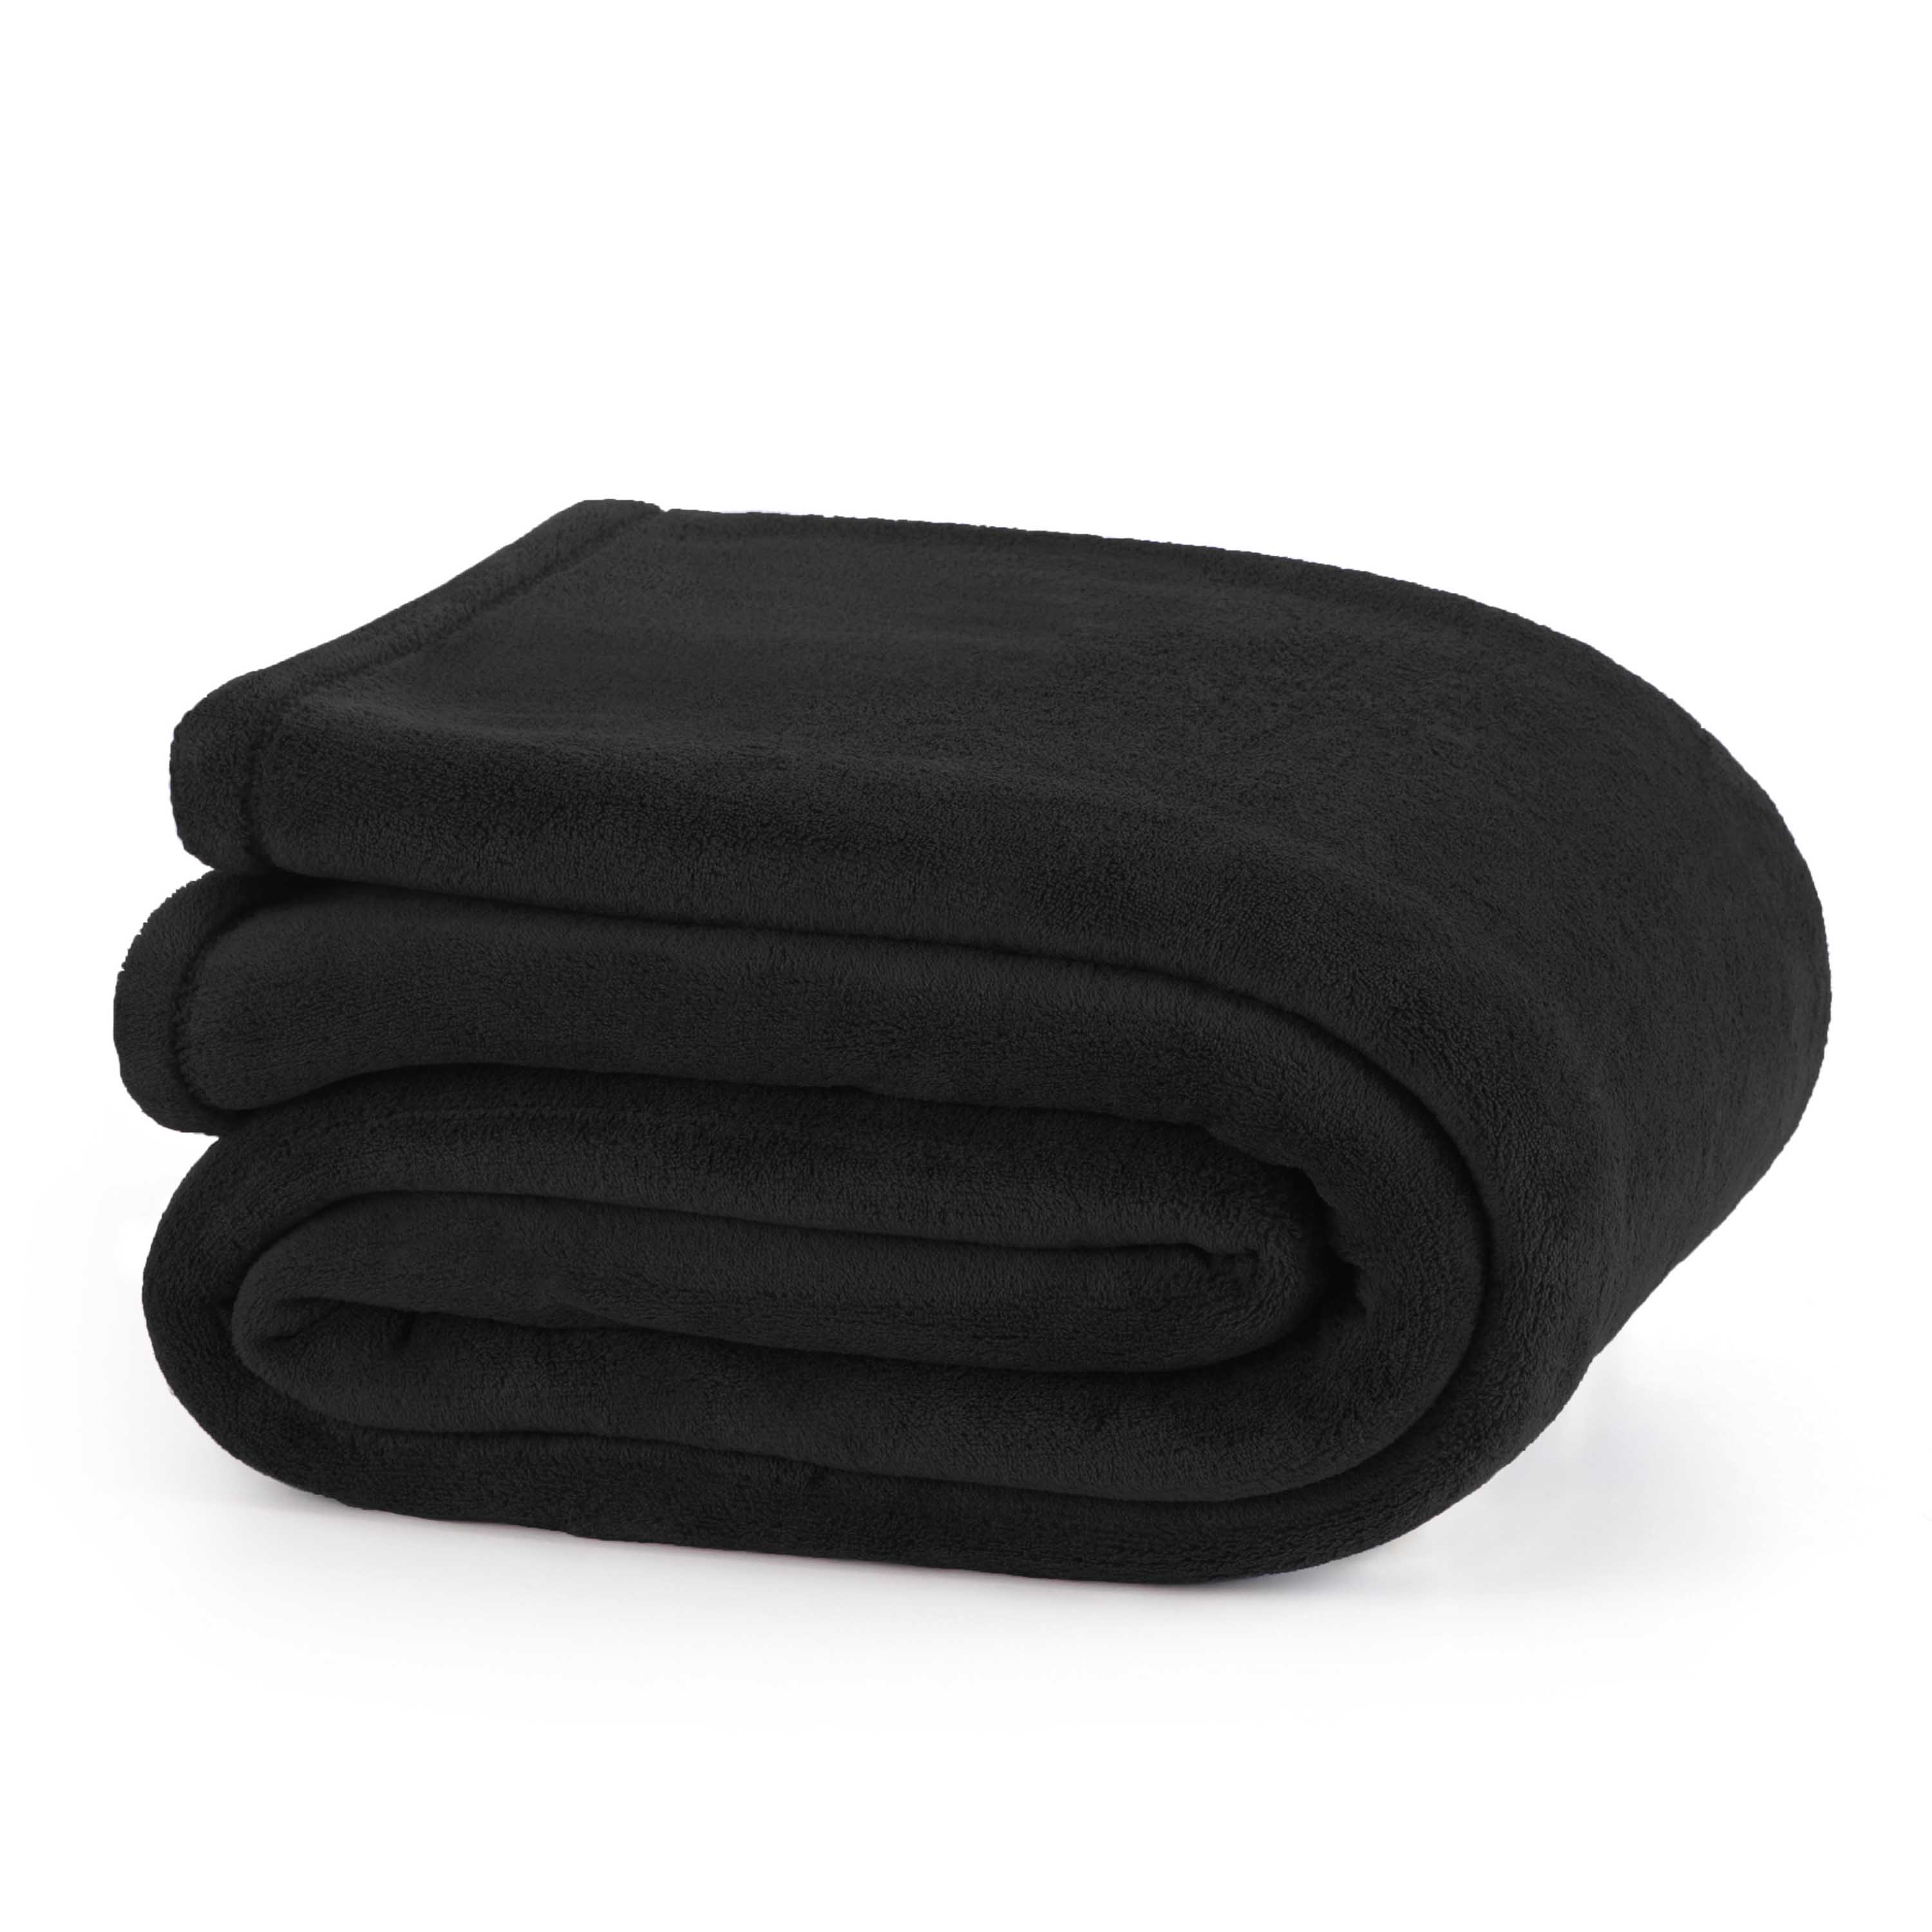 Martex Plush Blanket, King, Black